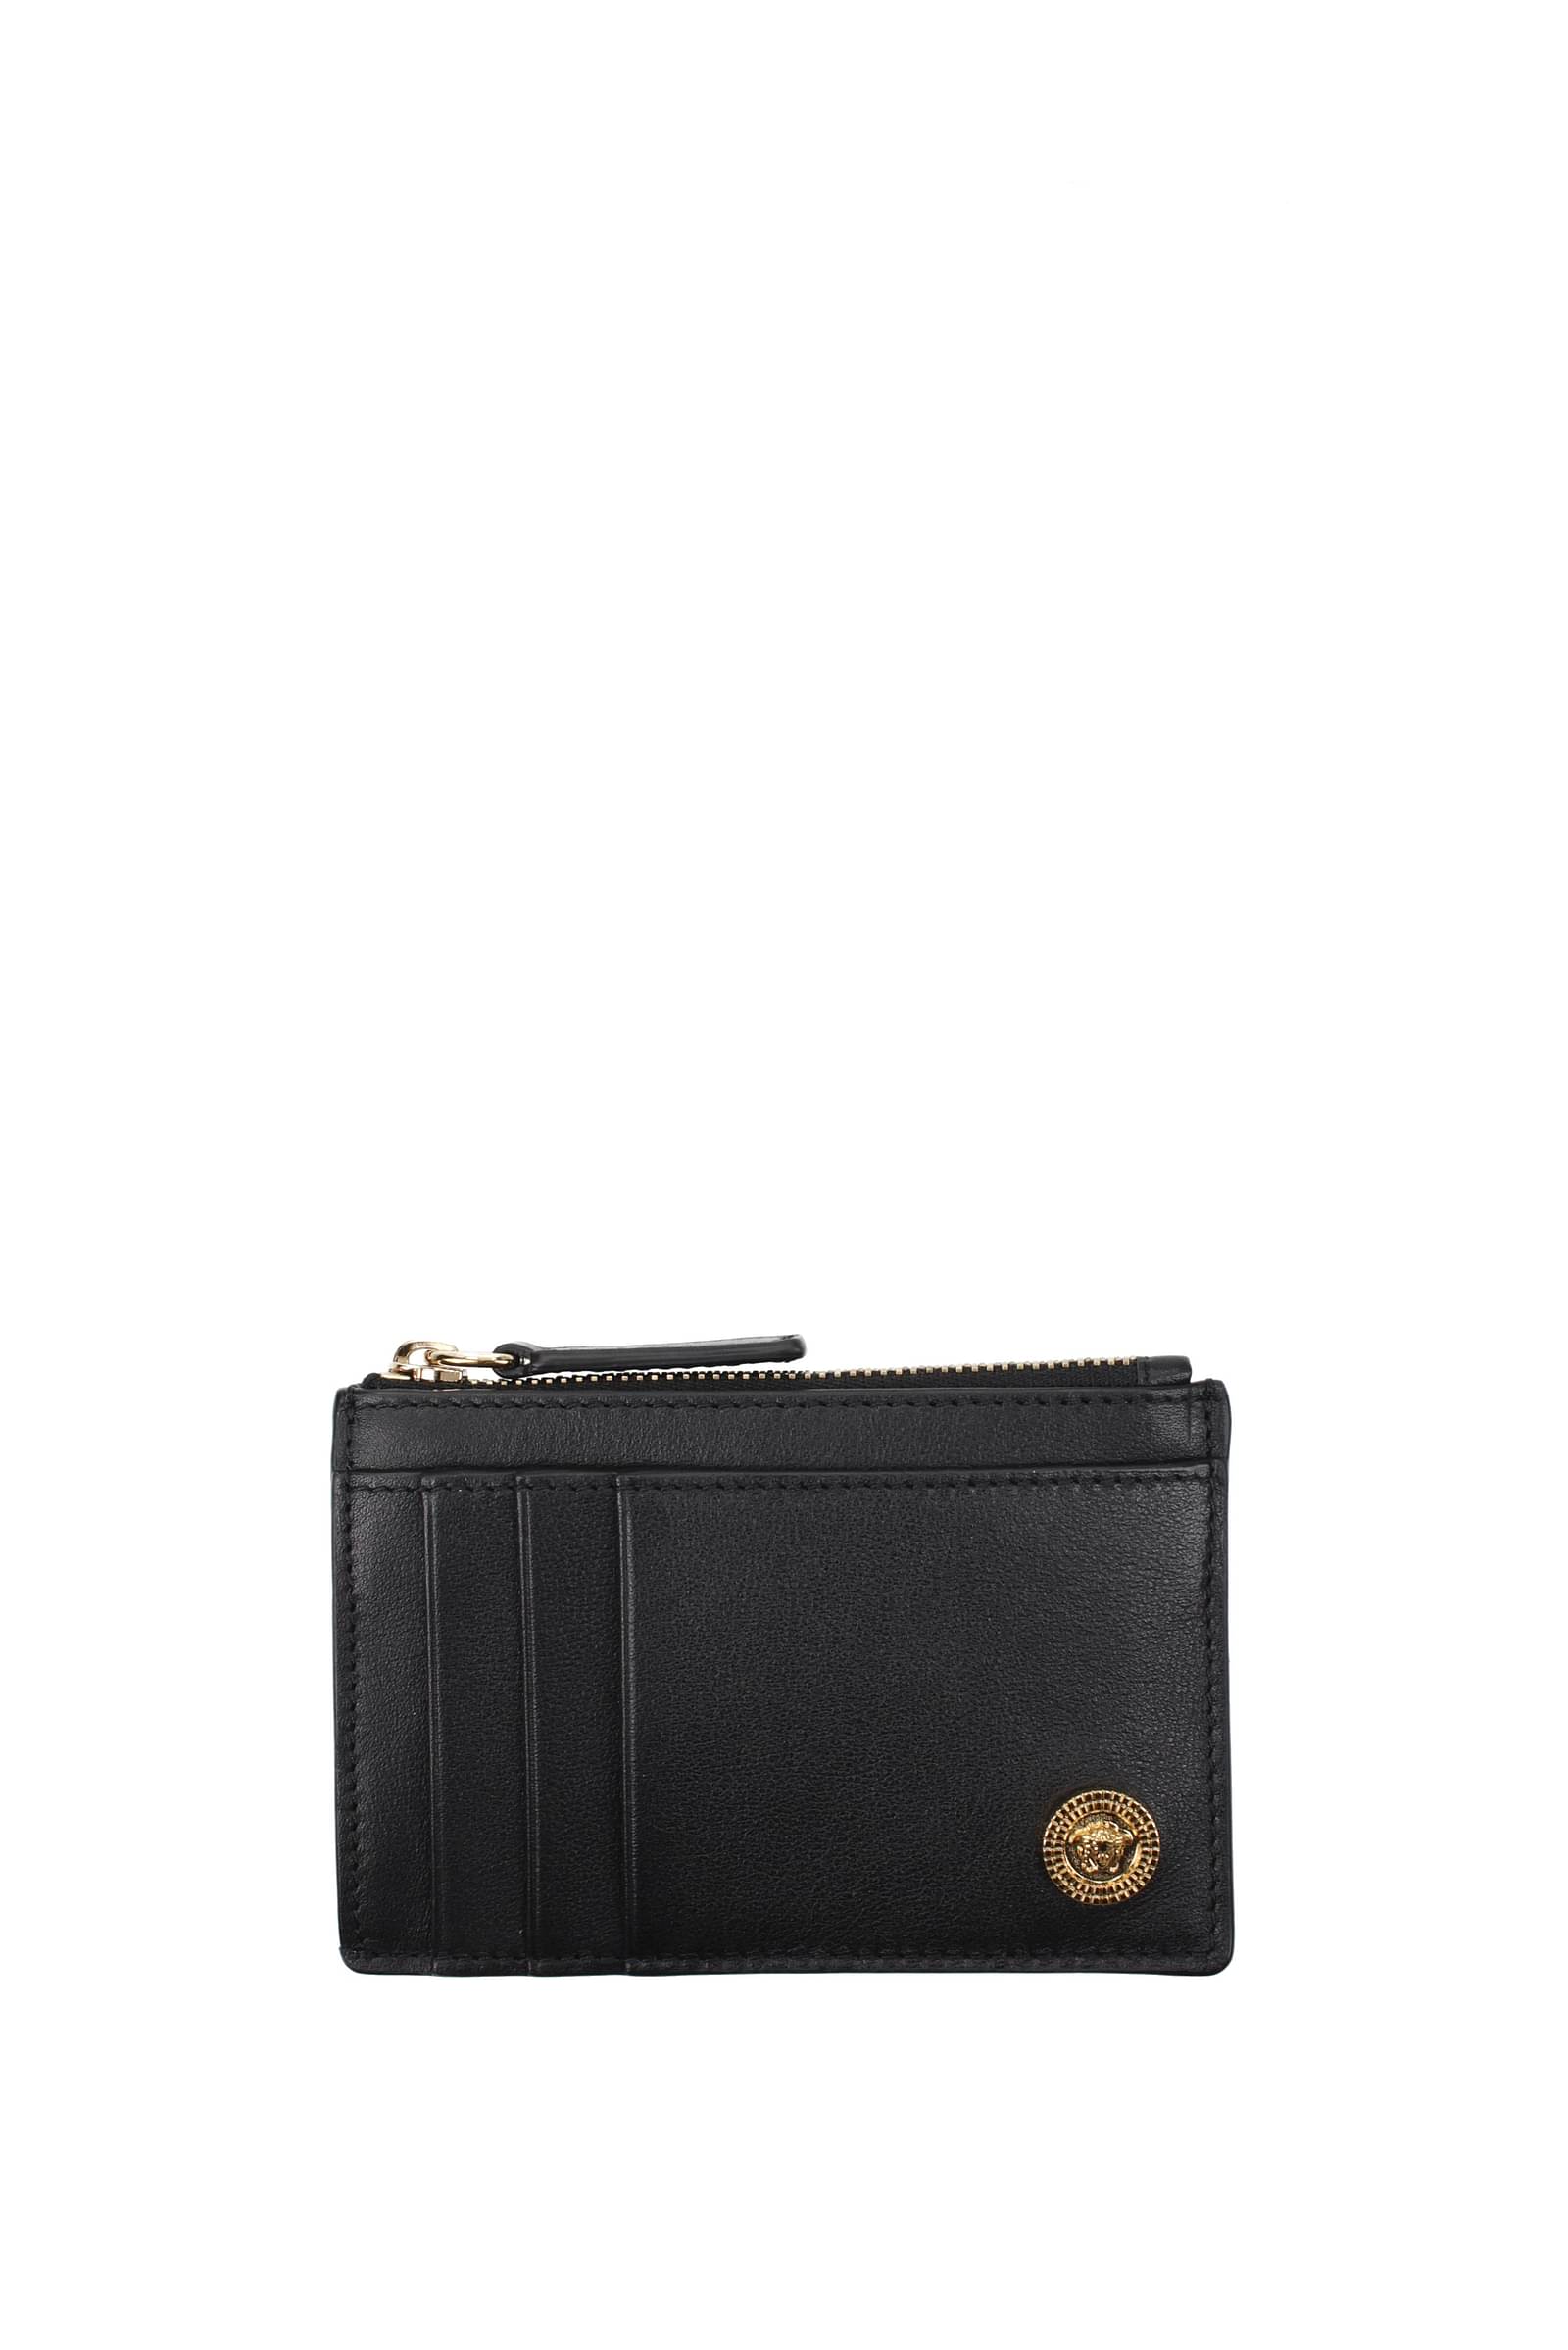 New]Three fold wallet Men's coin purse card case dark brown - BE FORWARD  Store